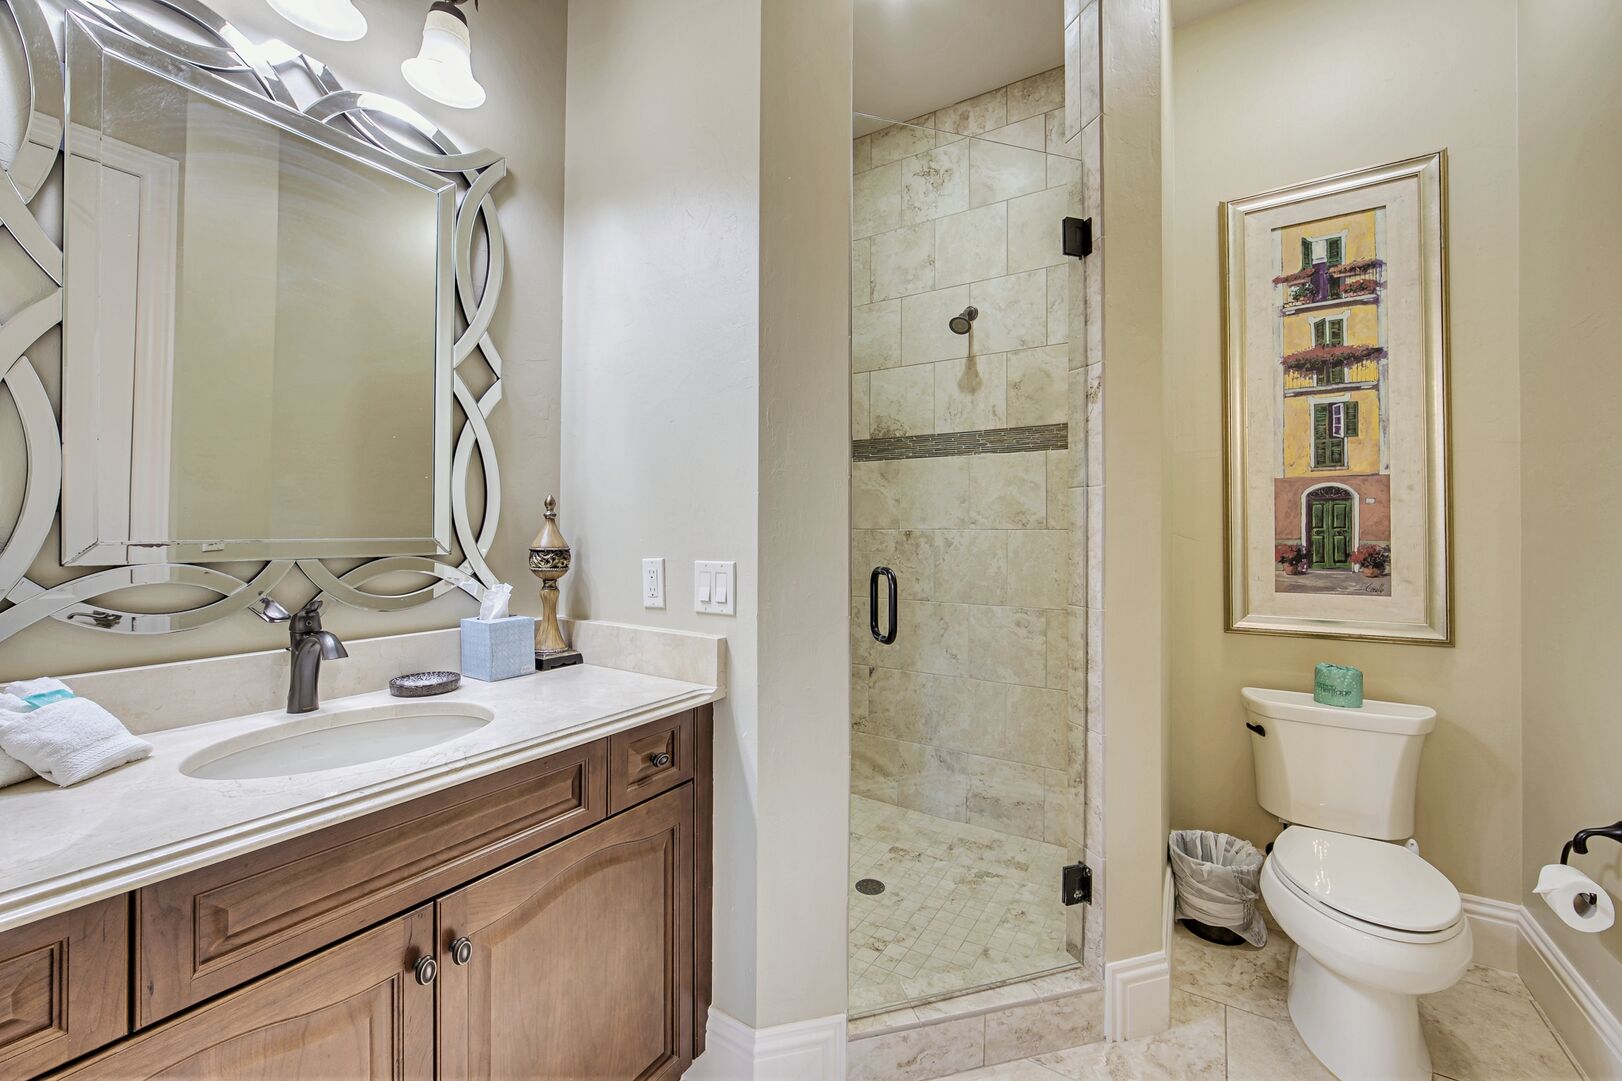 Bathroom with Shower, Toilet, Single Vanity Sink, and Mirror.